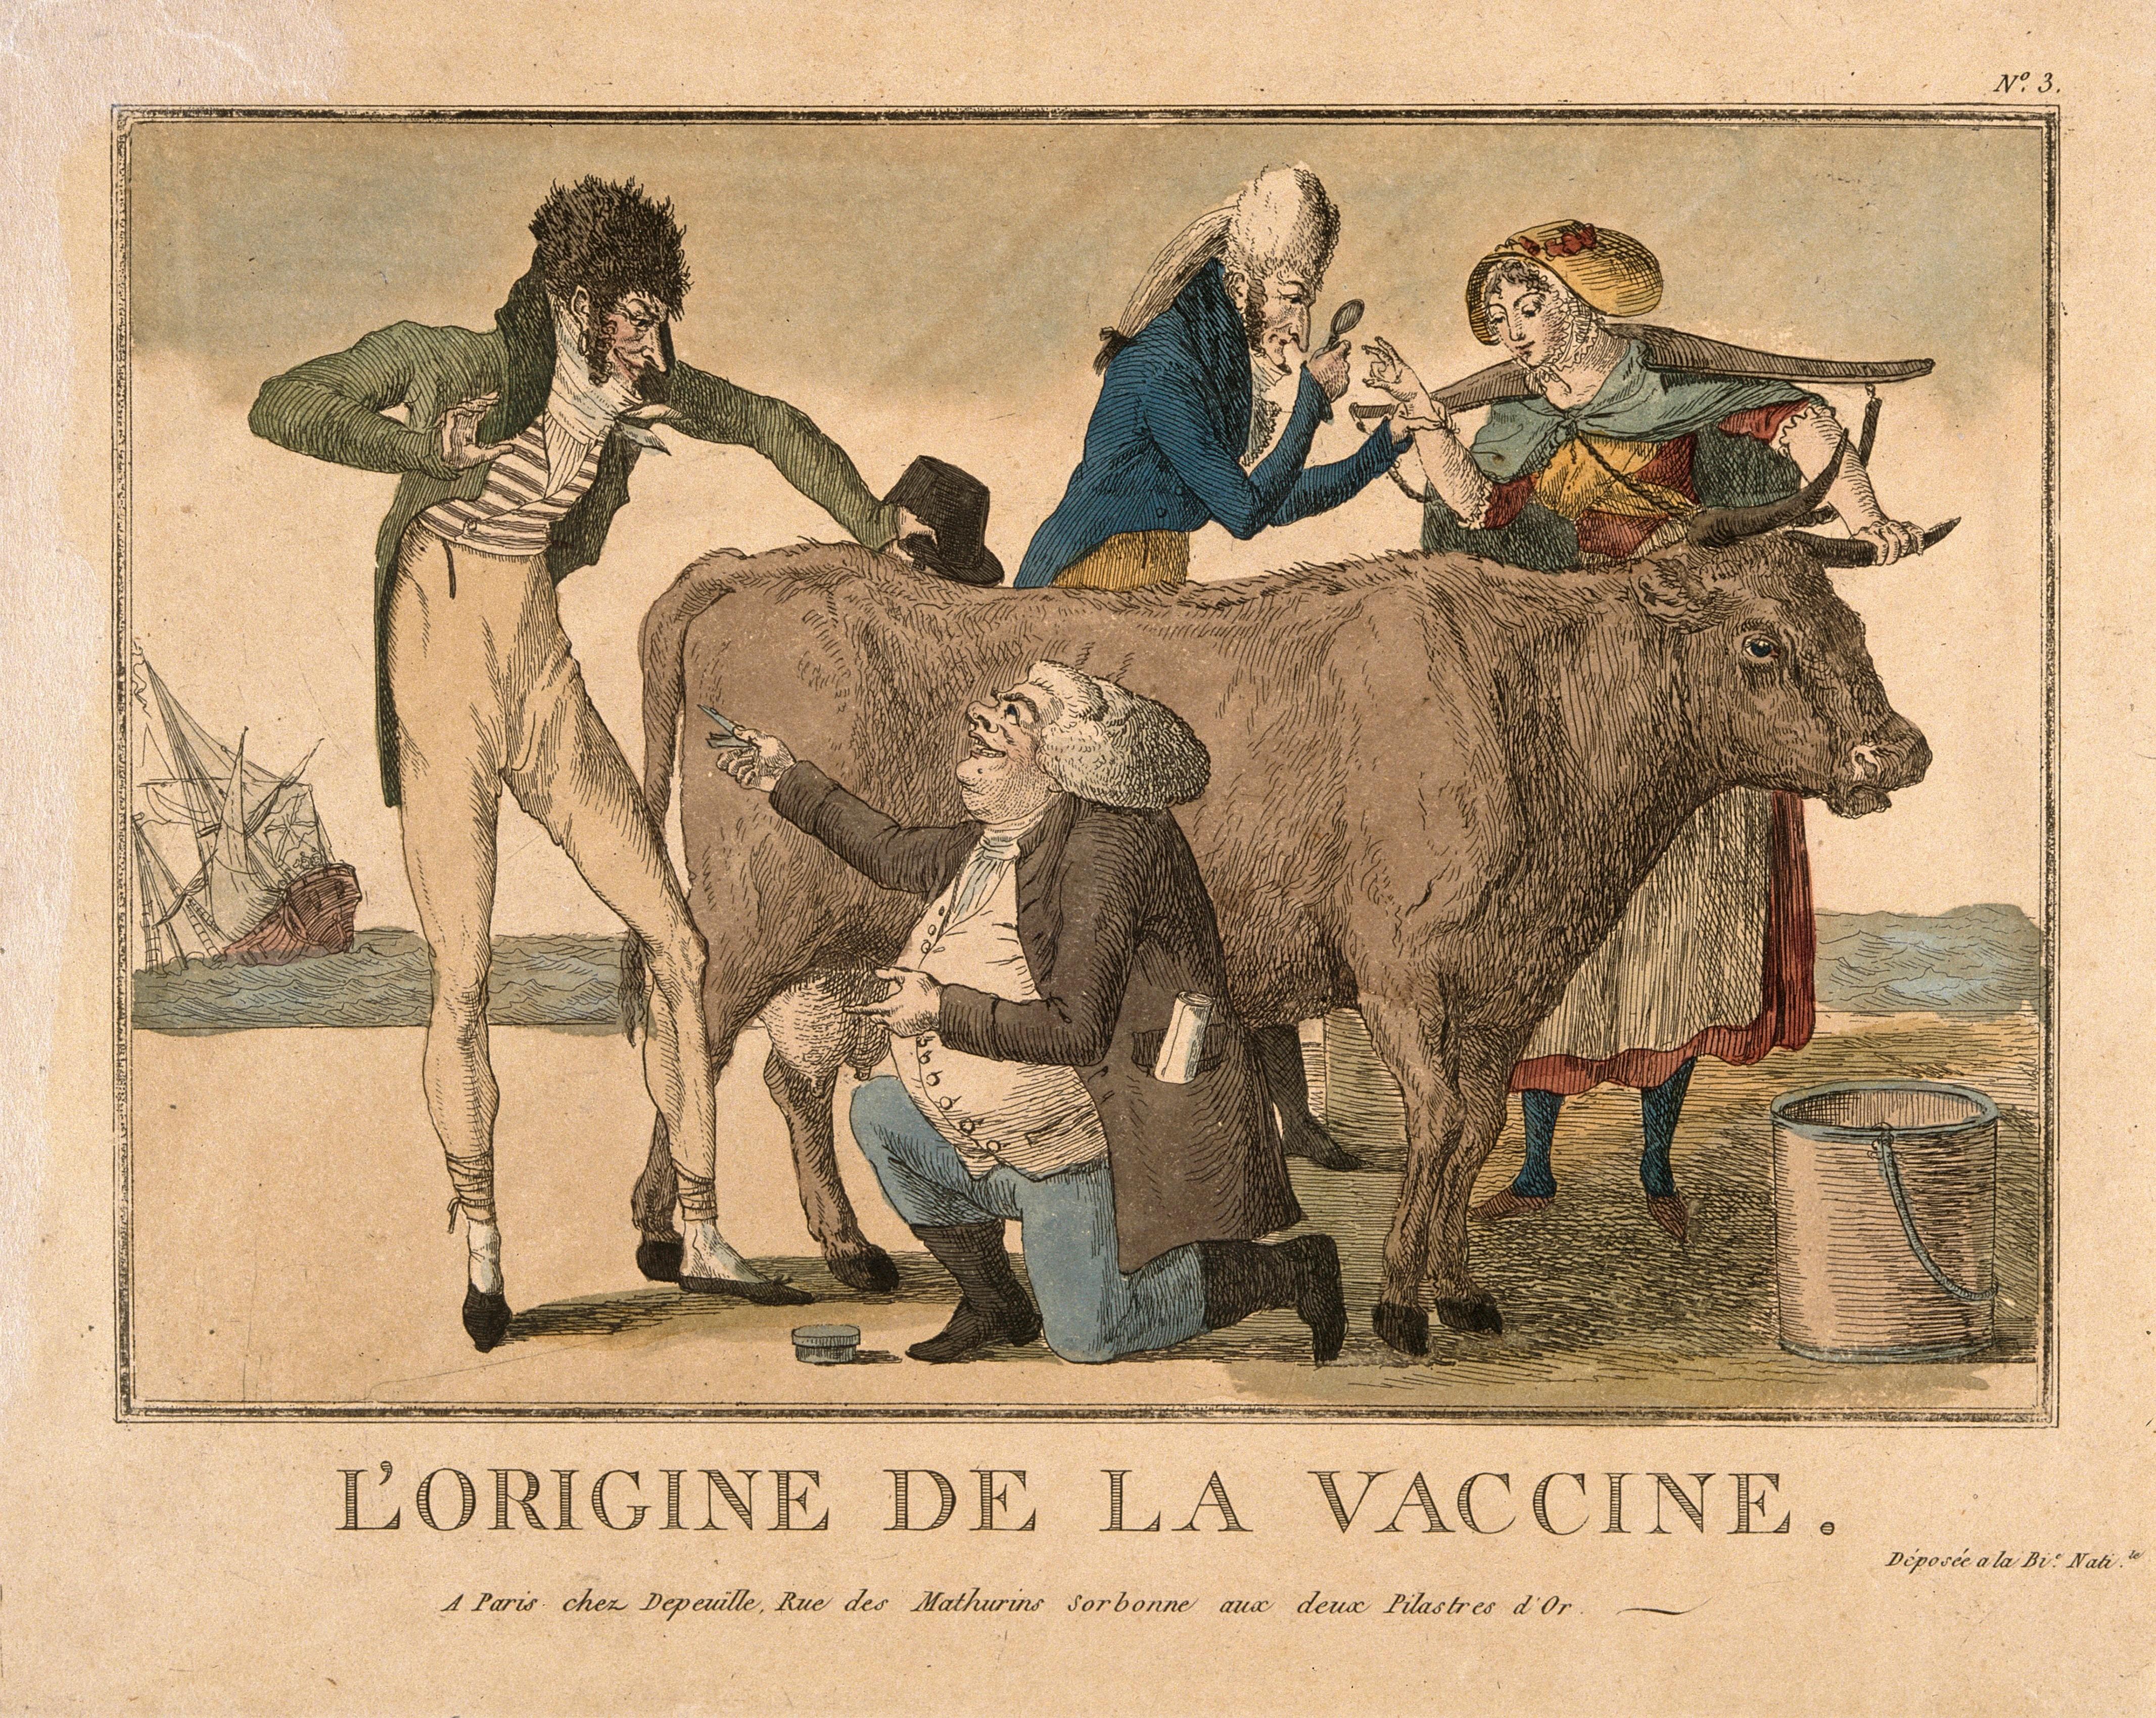 L'origine de la vaccine